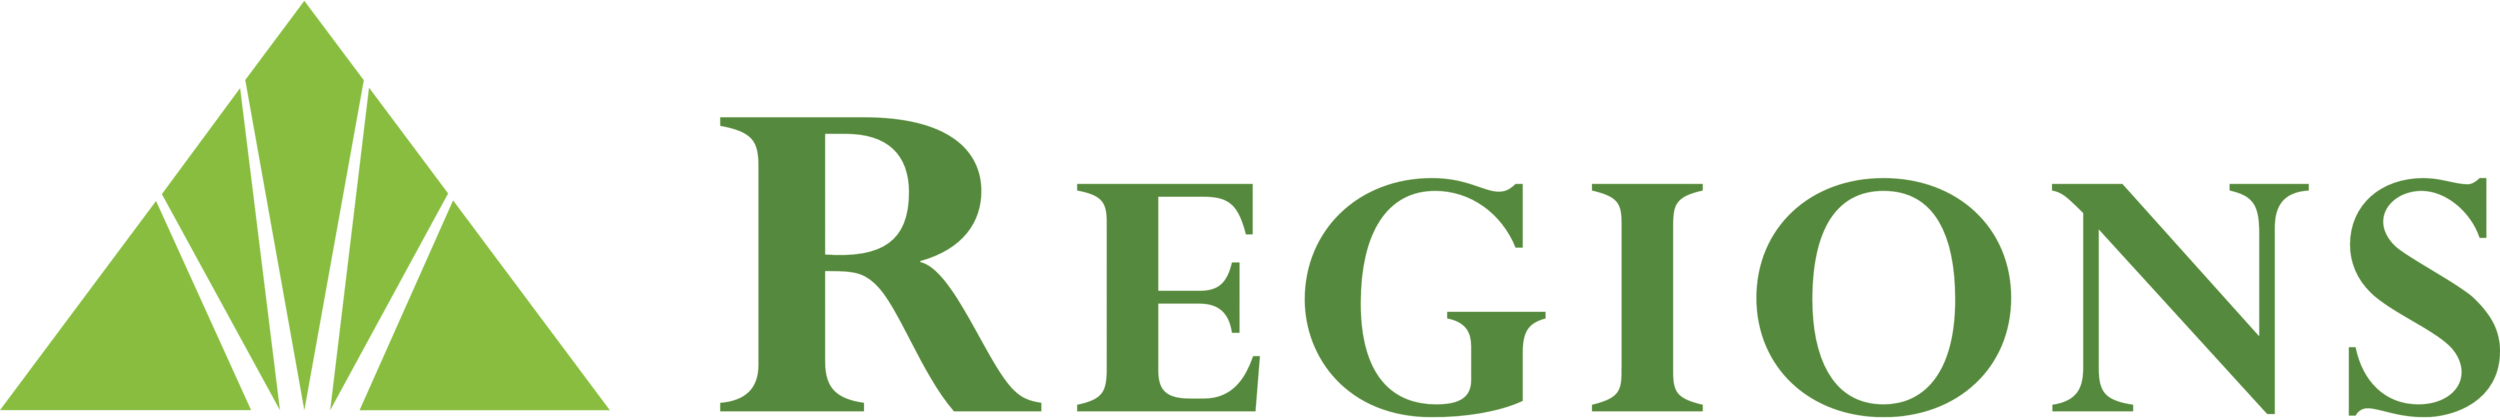 regions logo.png